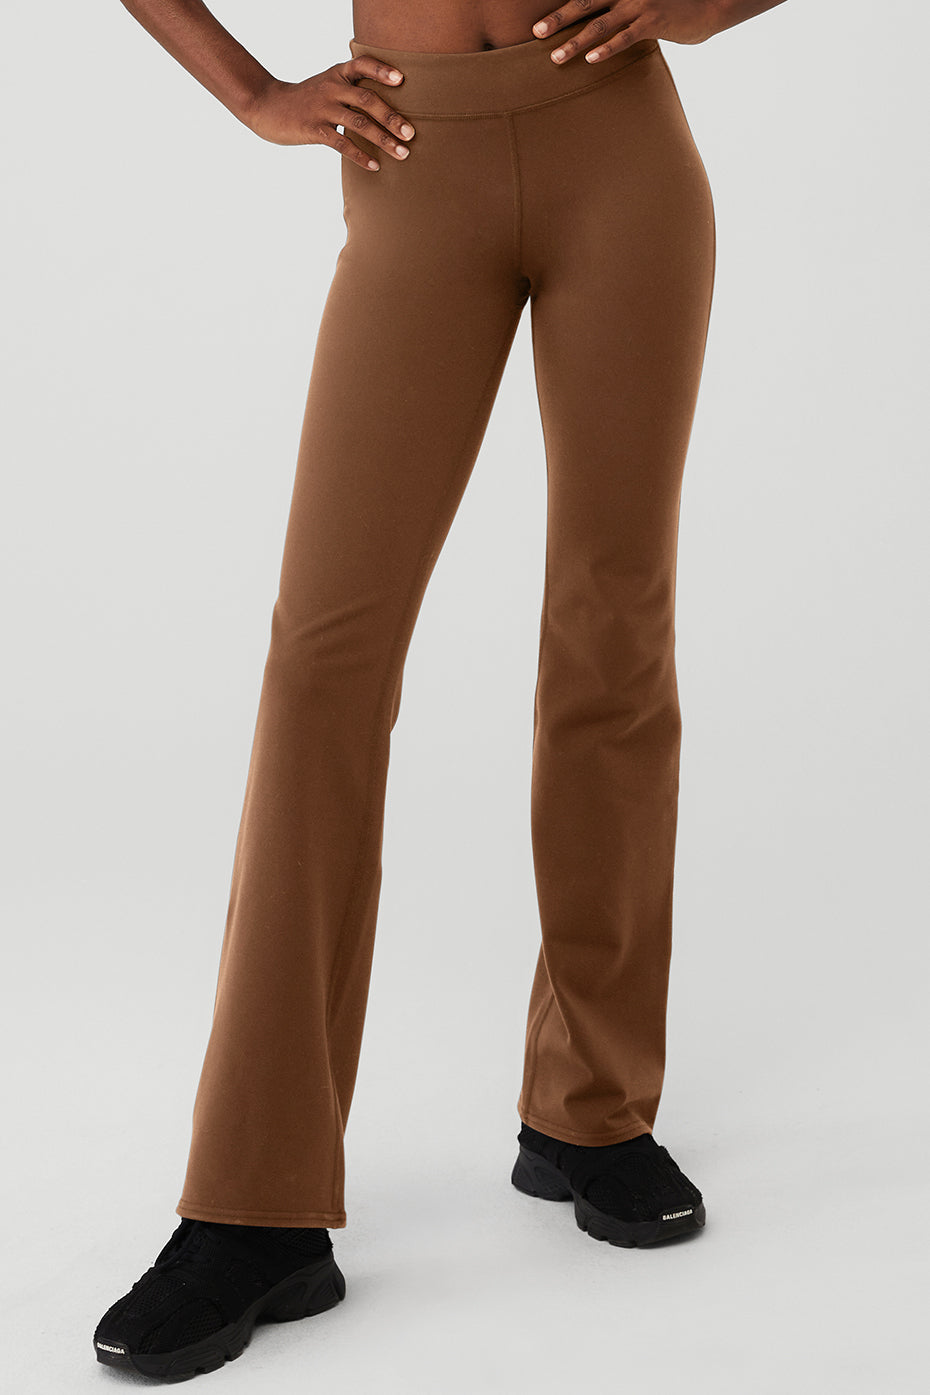 Alo Yoga Airlift High-Waist 7/8 Belted Charmer Leggings Cinnamon Brown Pants